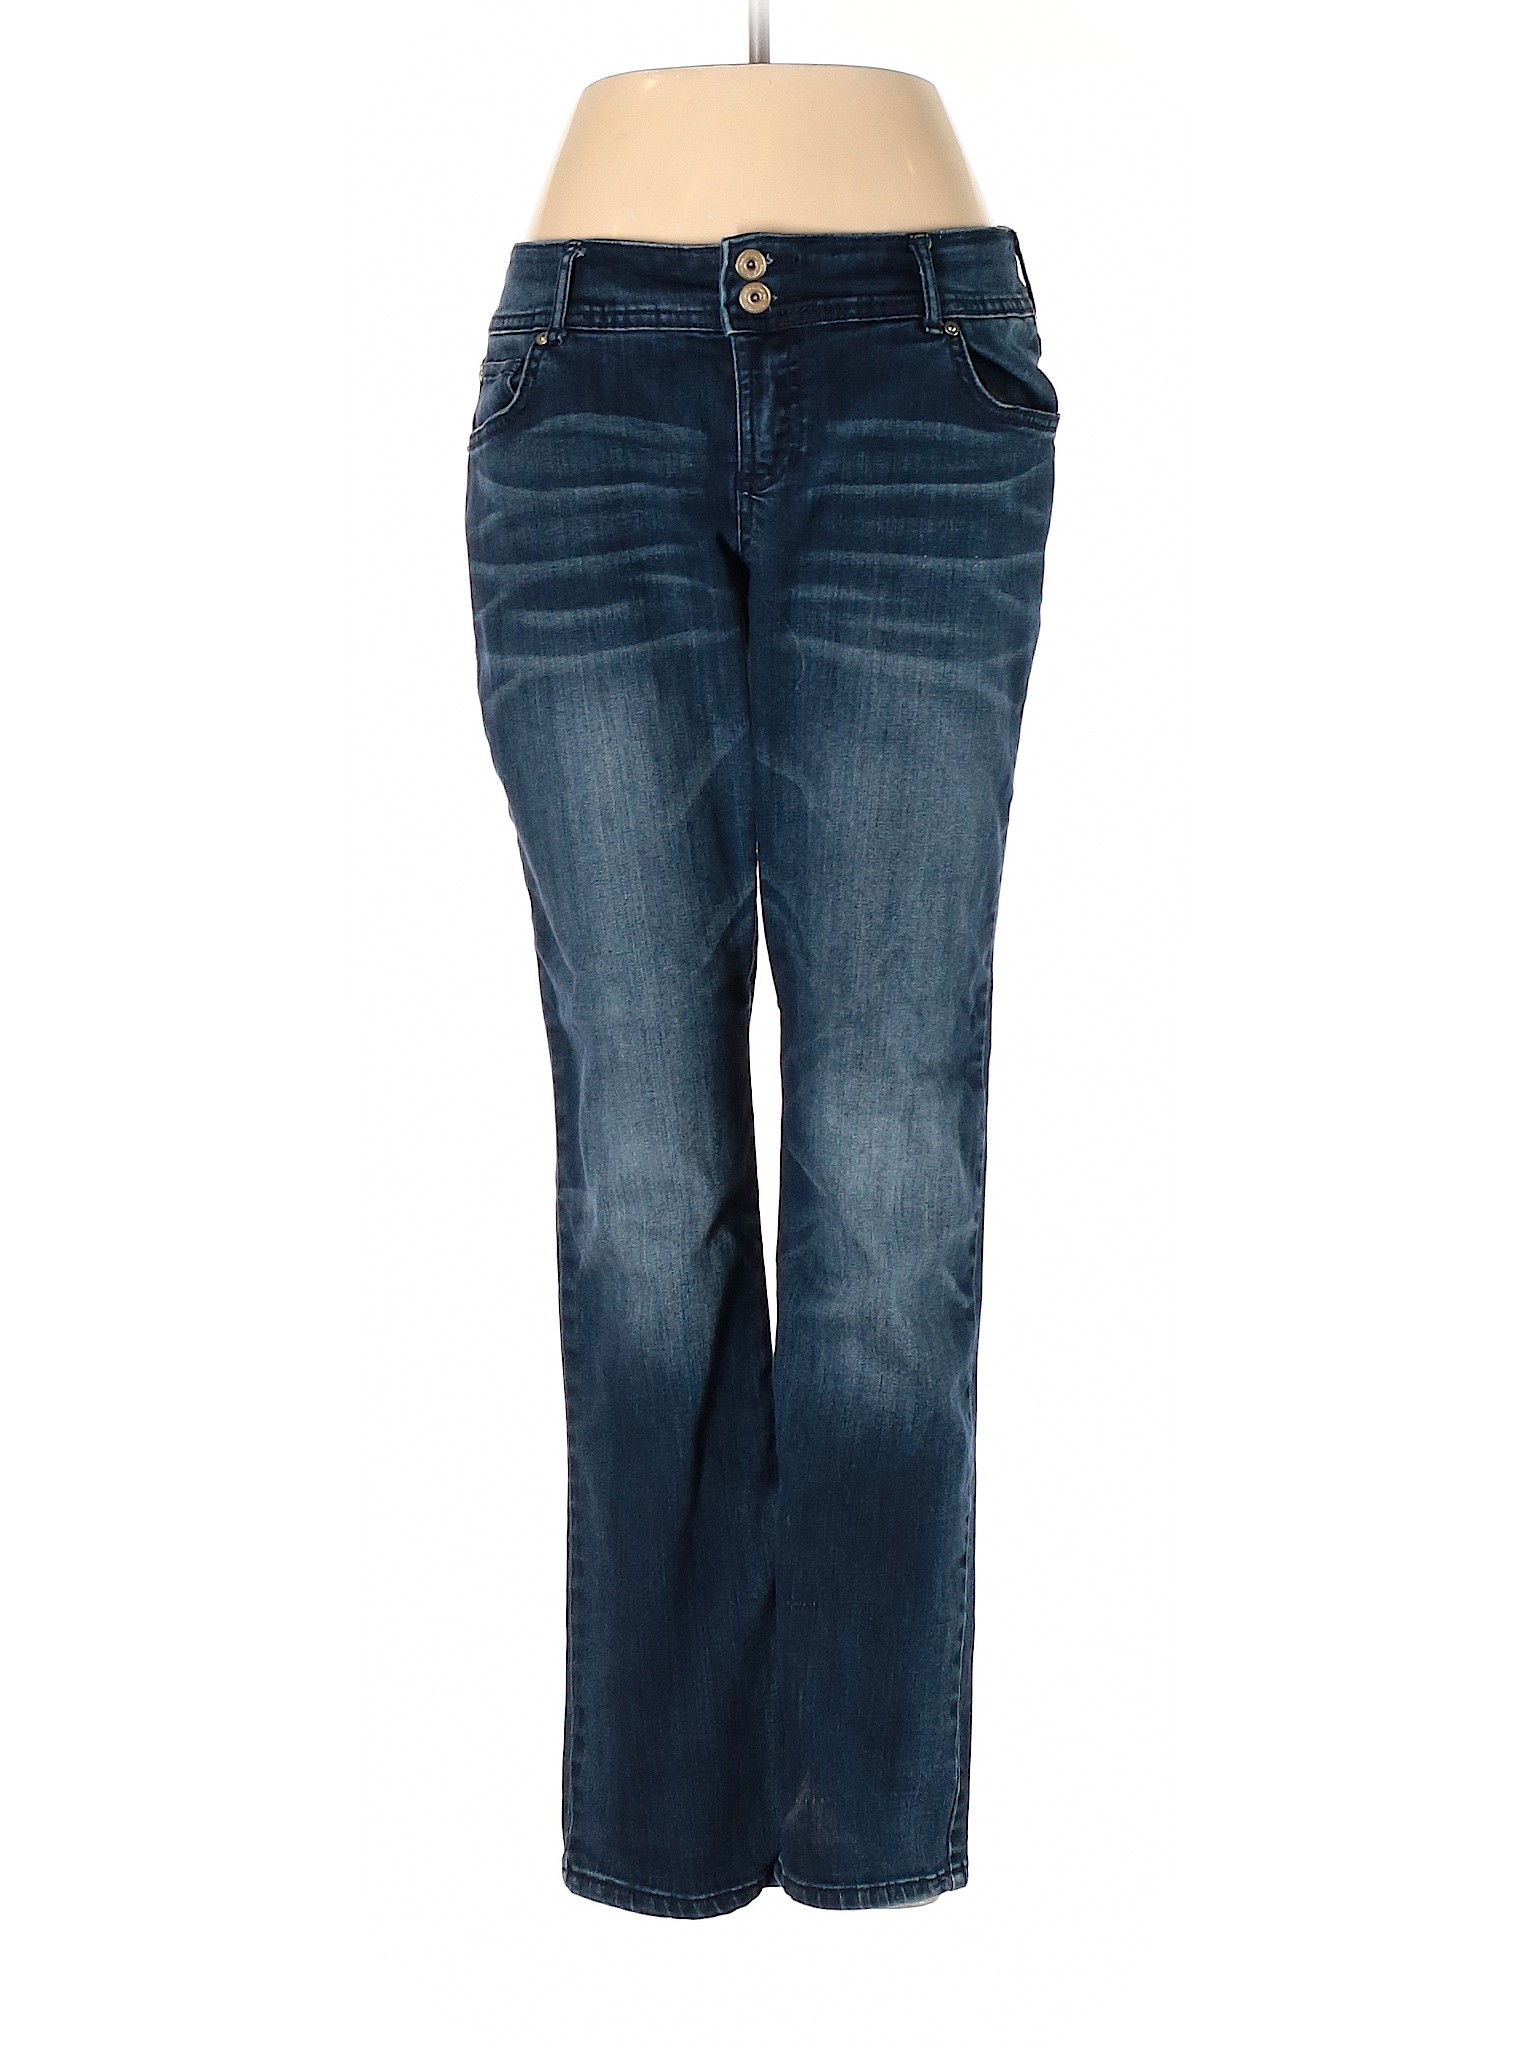 Inc Denim Women Blue Jeans 0 | eBay